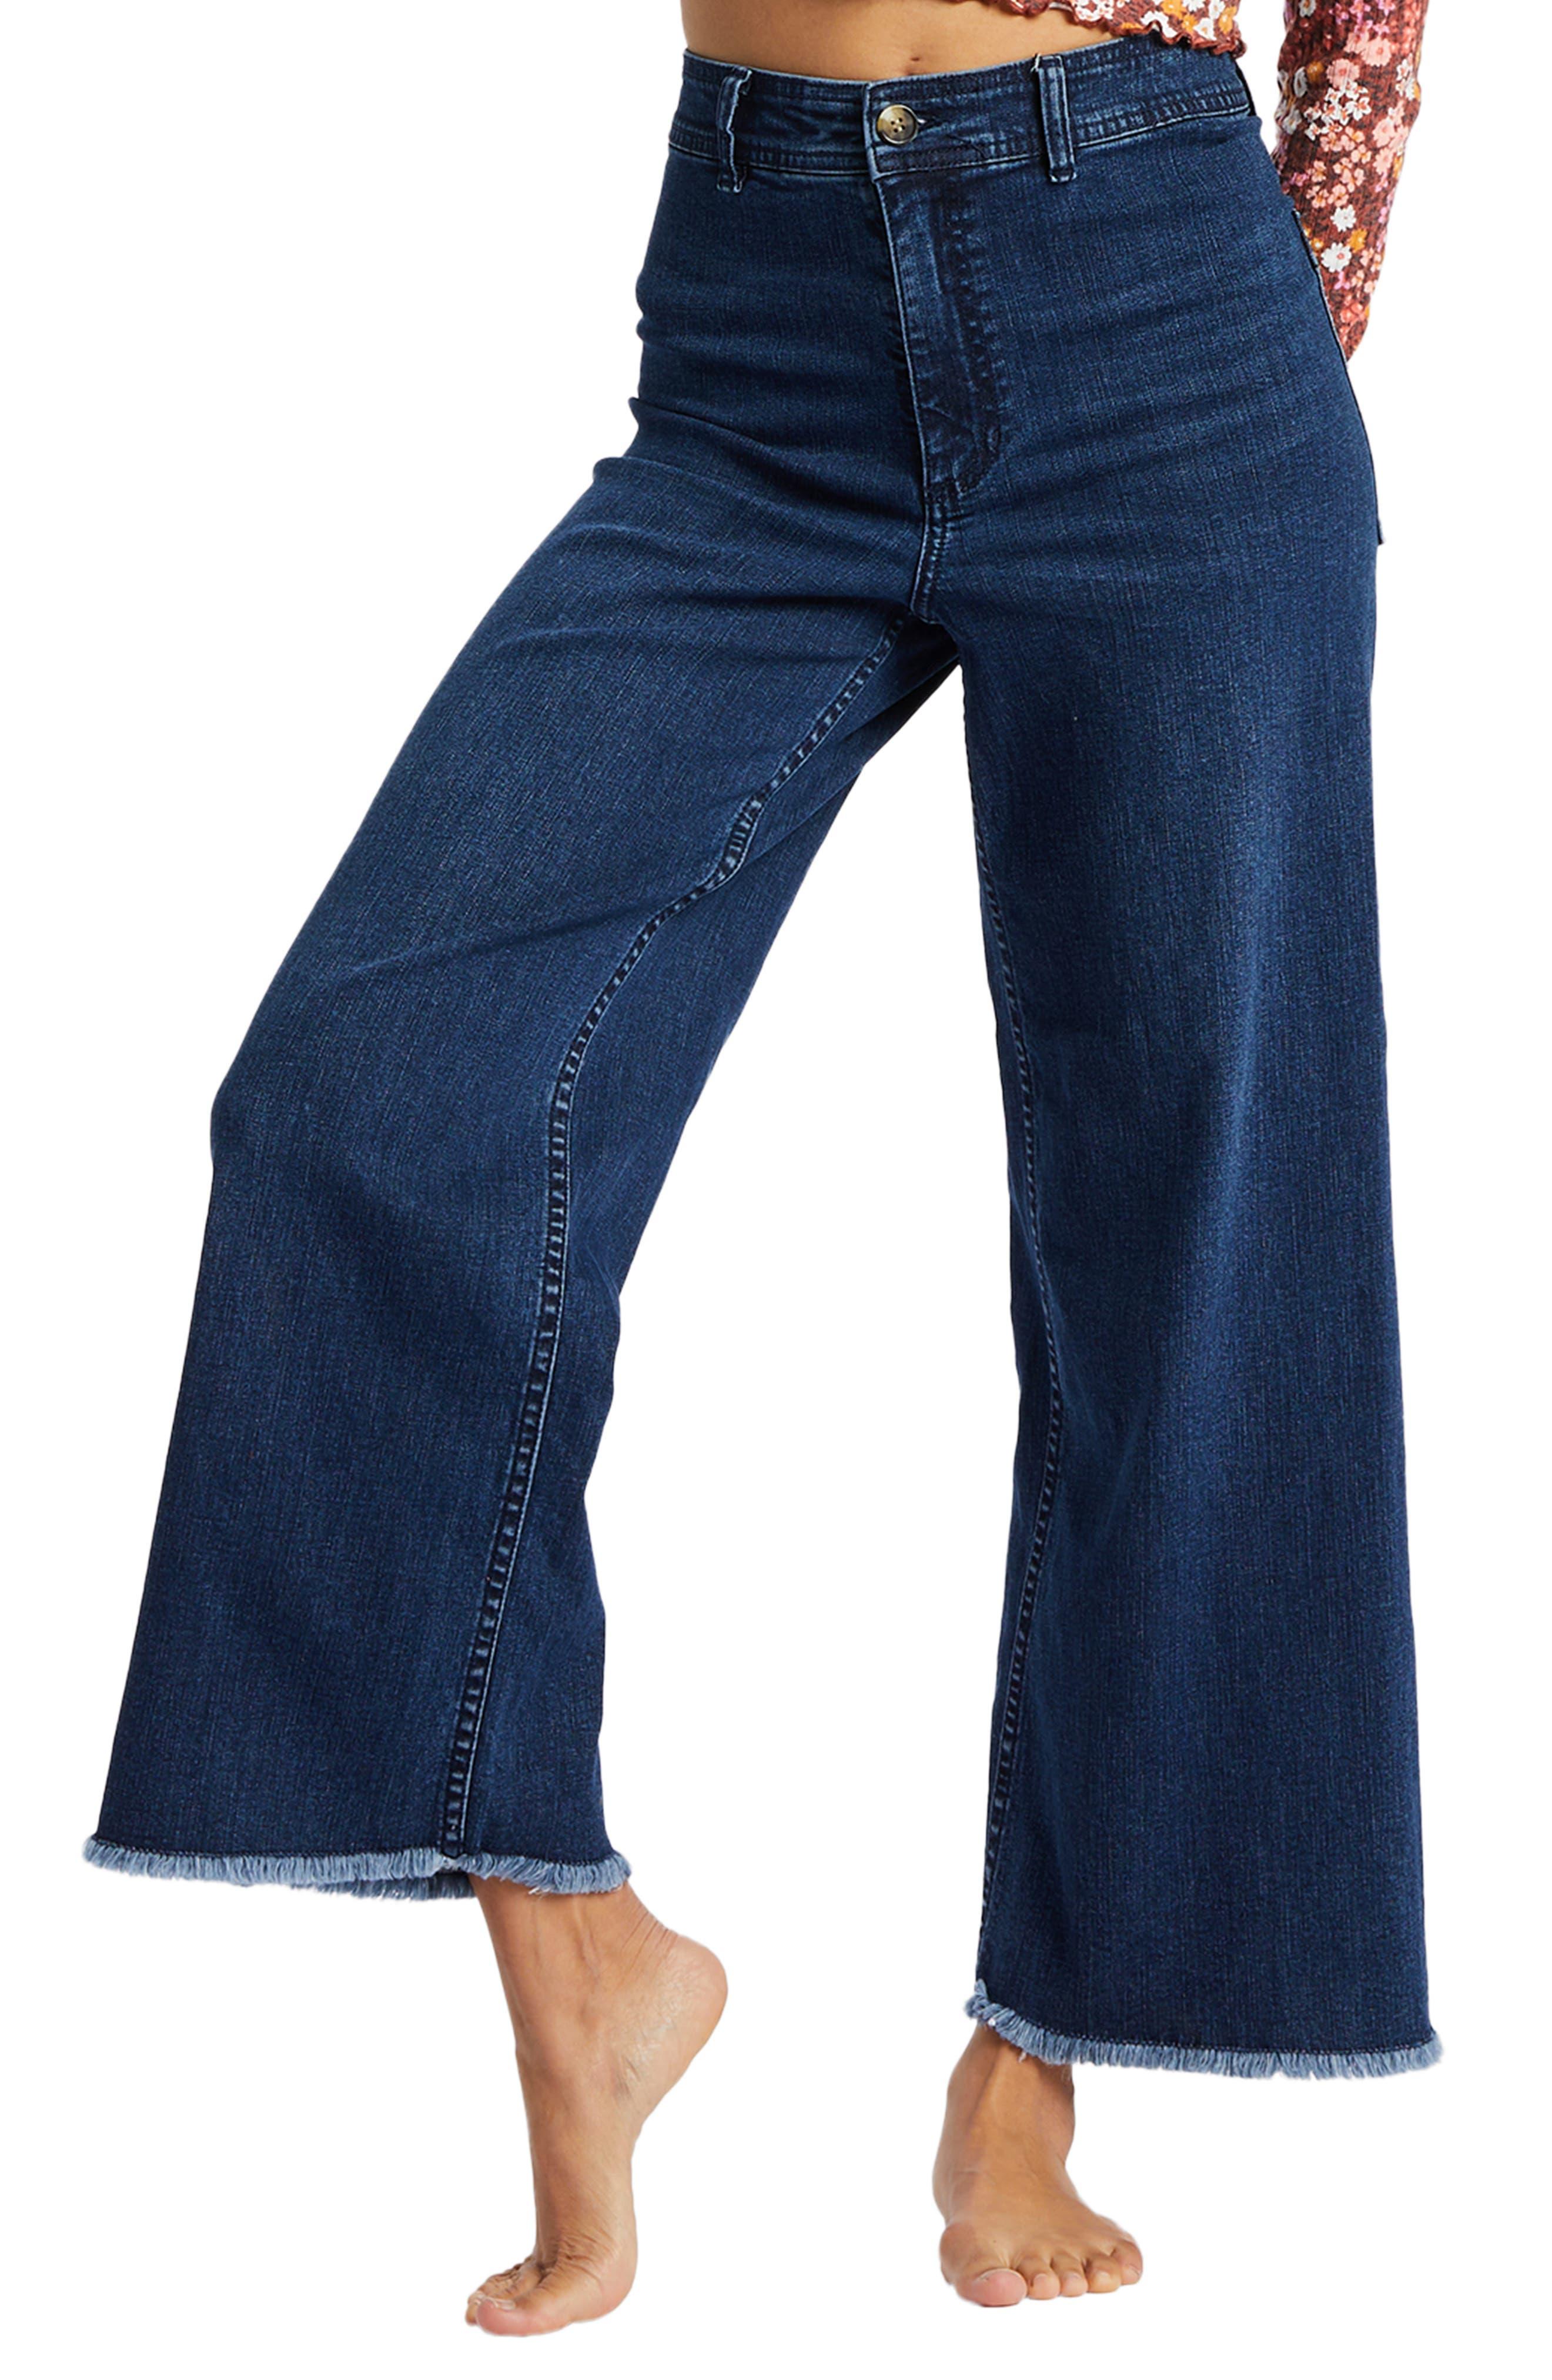 Free Fall - Wide Leg Jeans for Women